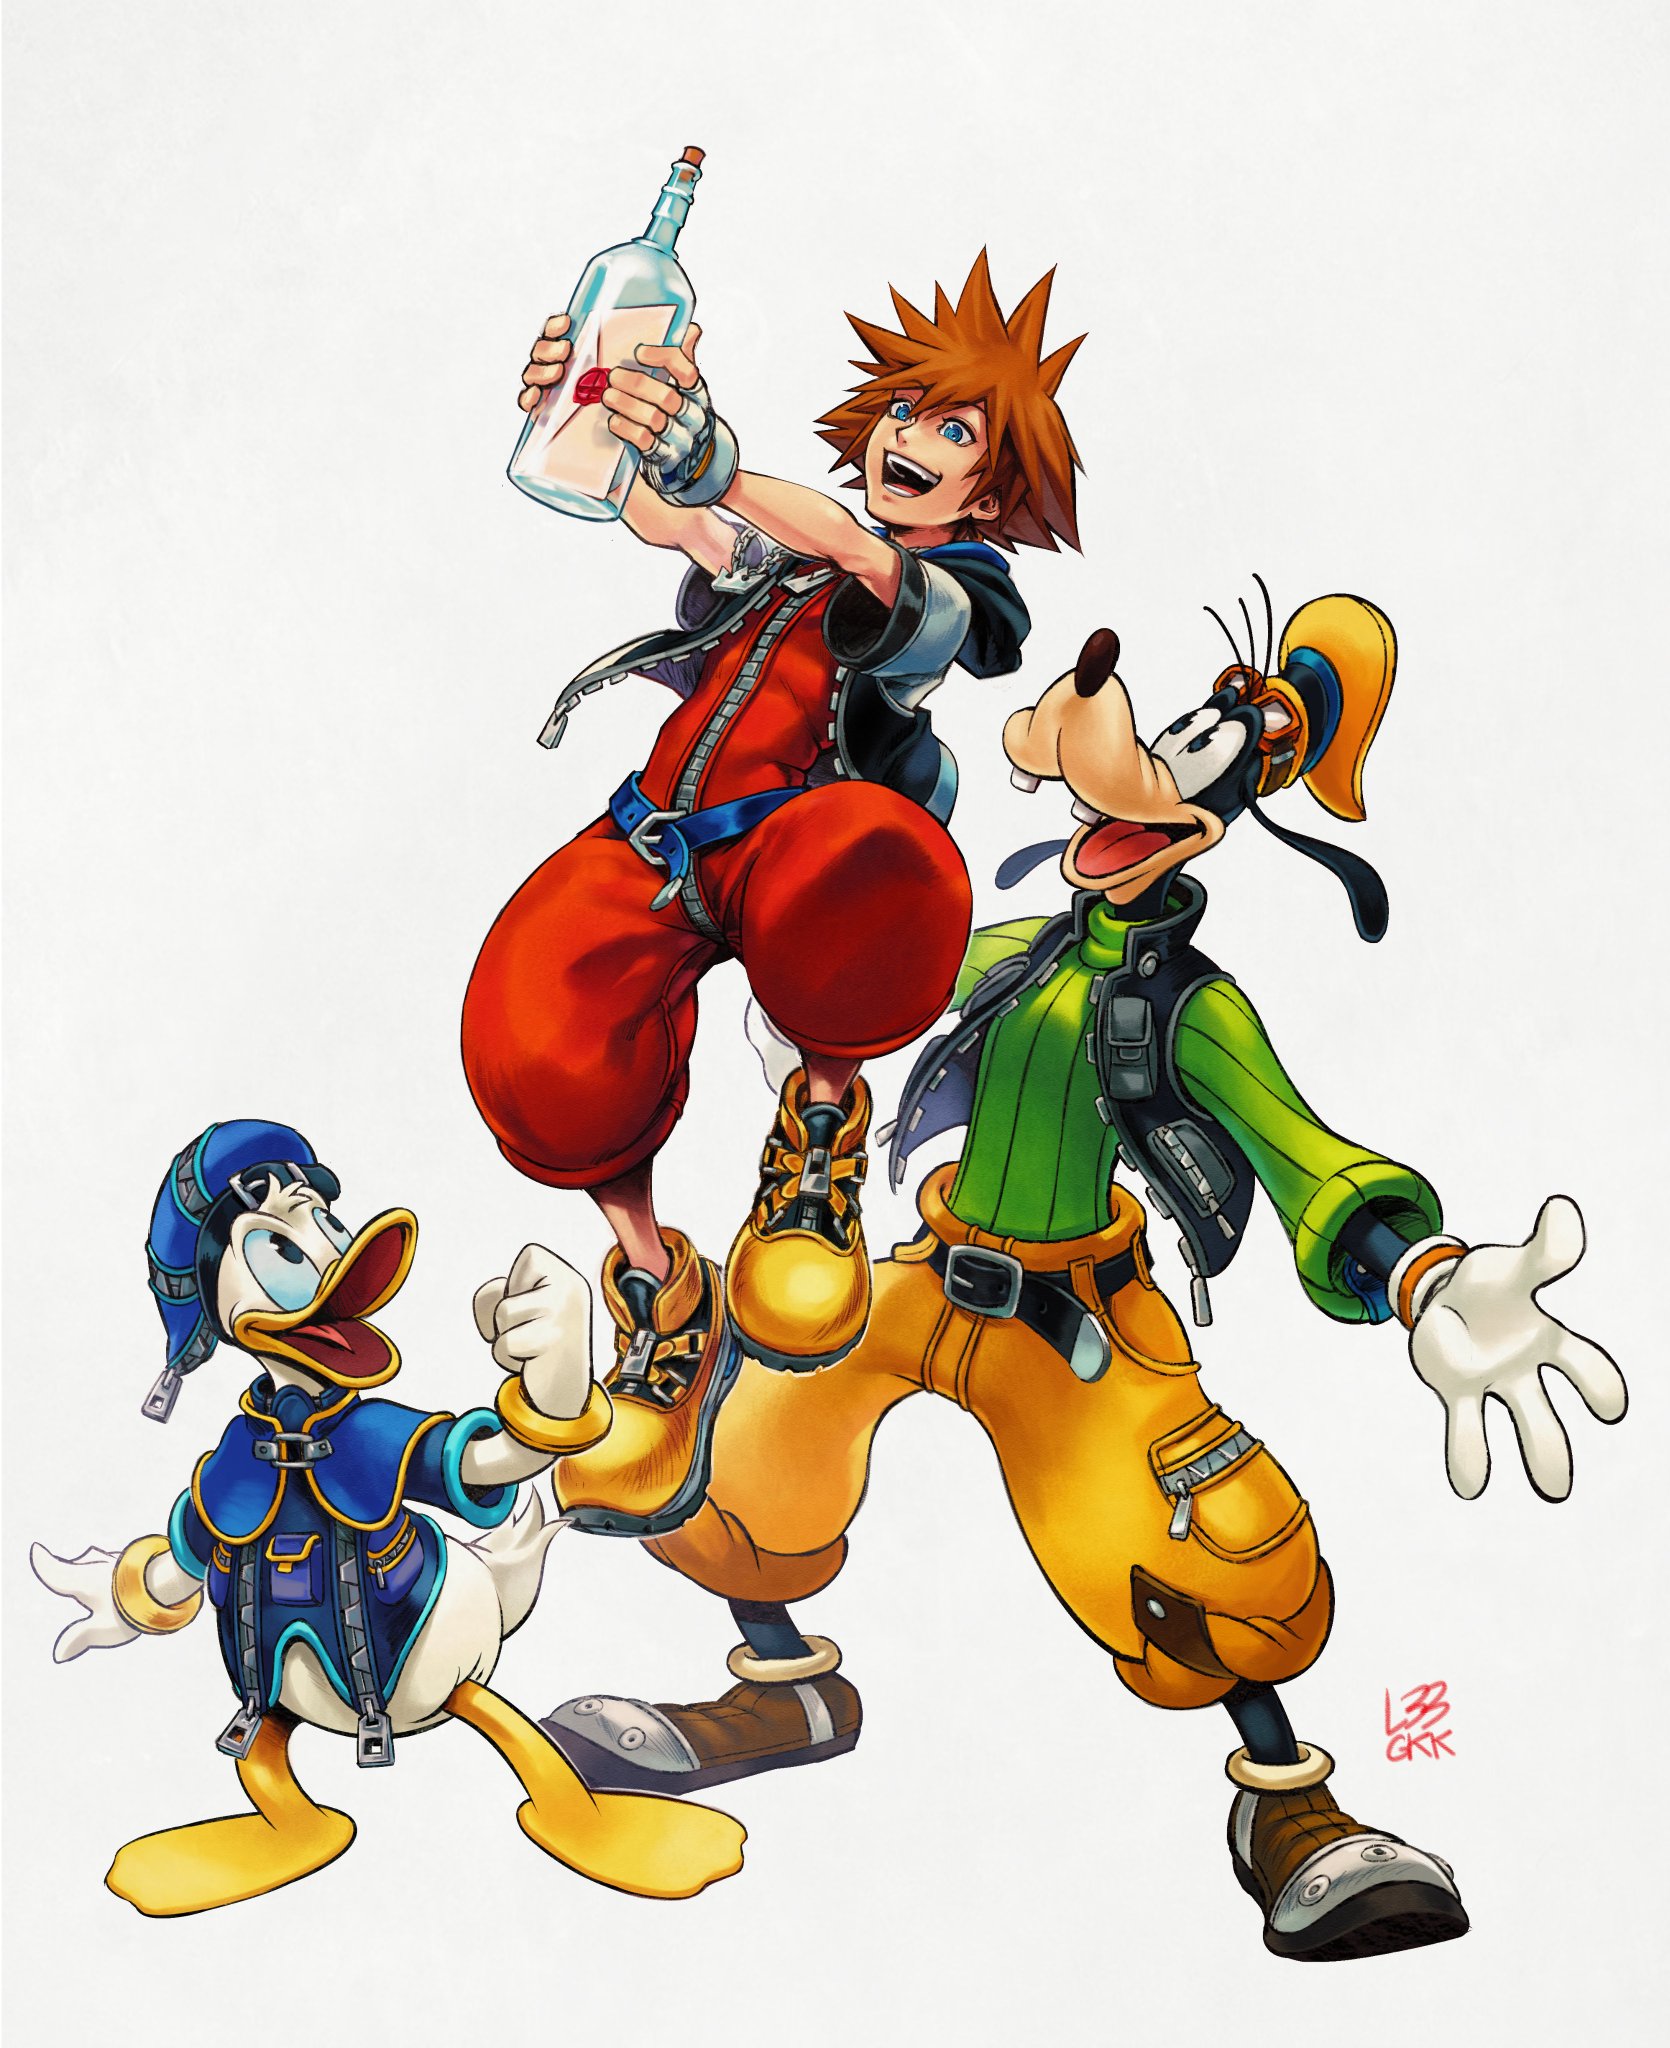 Kingdom Hearts III Art by LeoBgkk